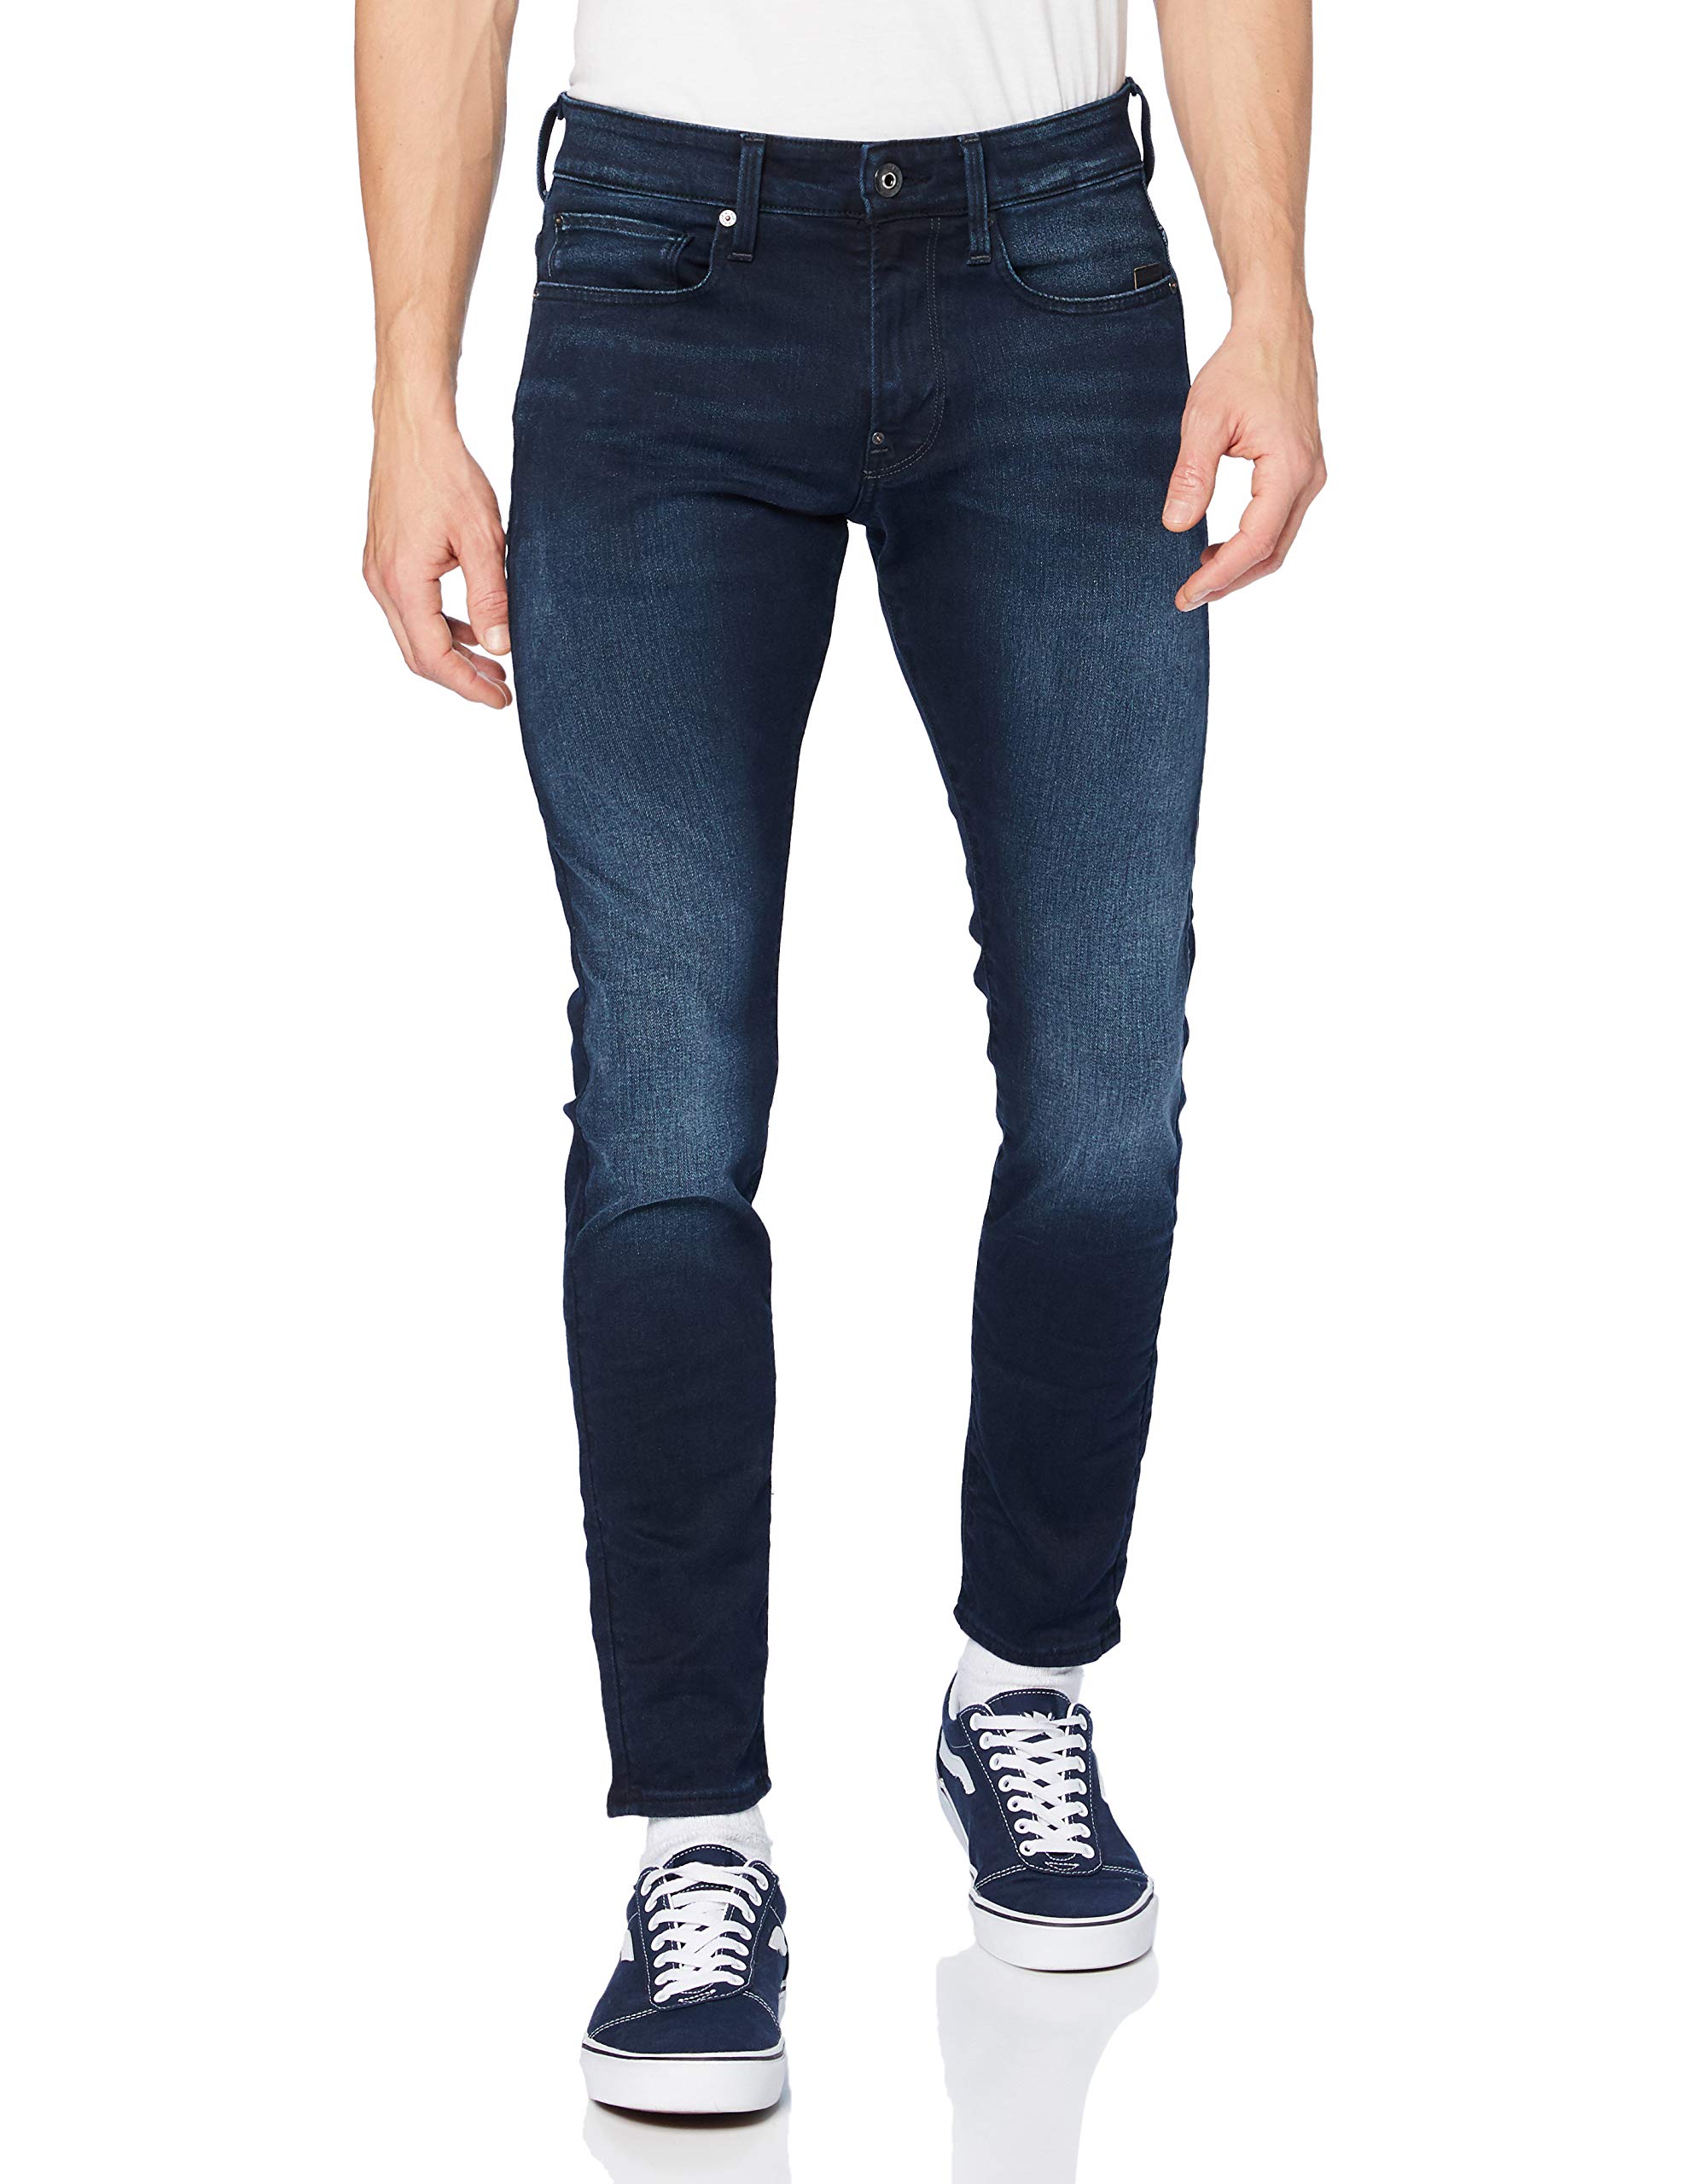 G-STAR RAW Herren Revend Skinny Jeans, Blau (dk aged 51010-6590-89), 36W / 32L